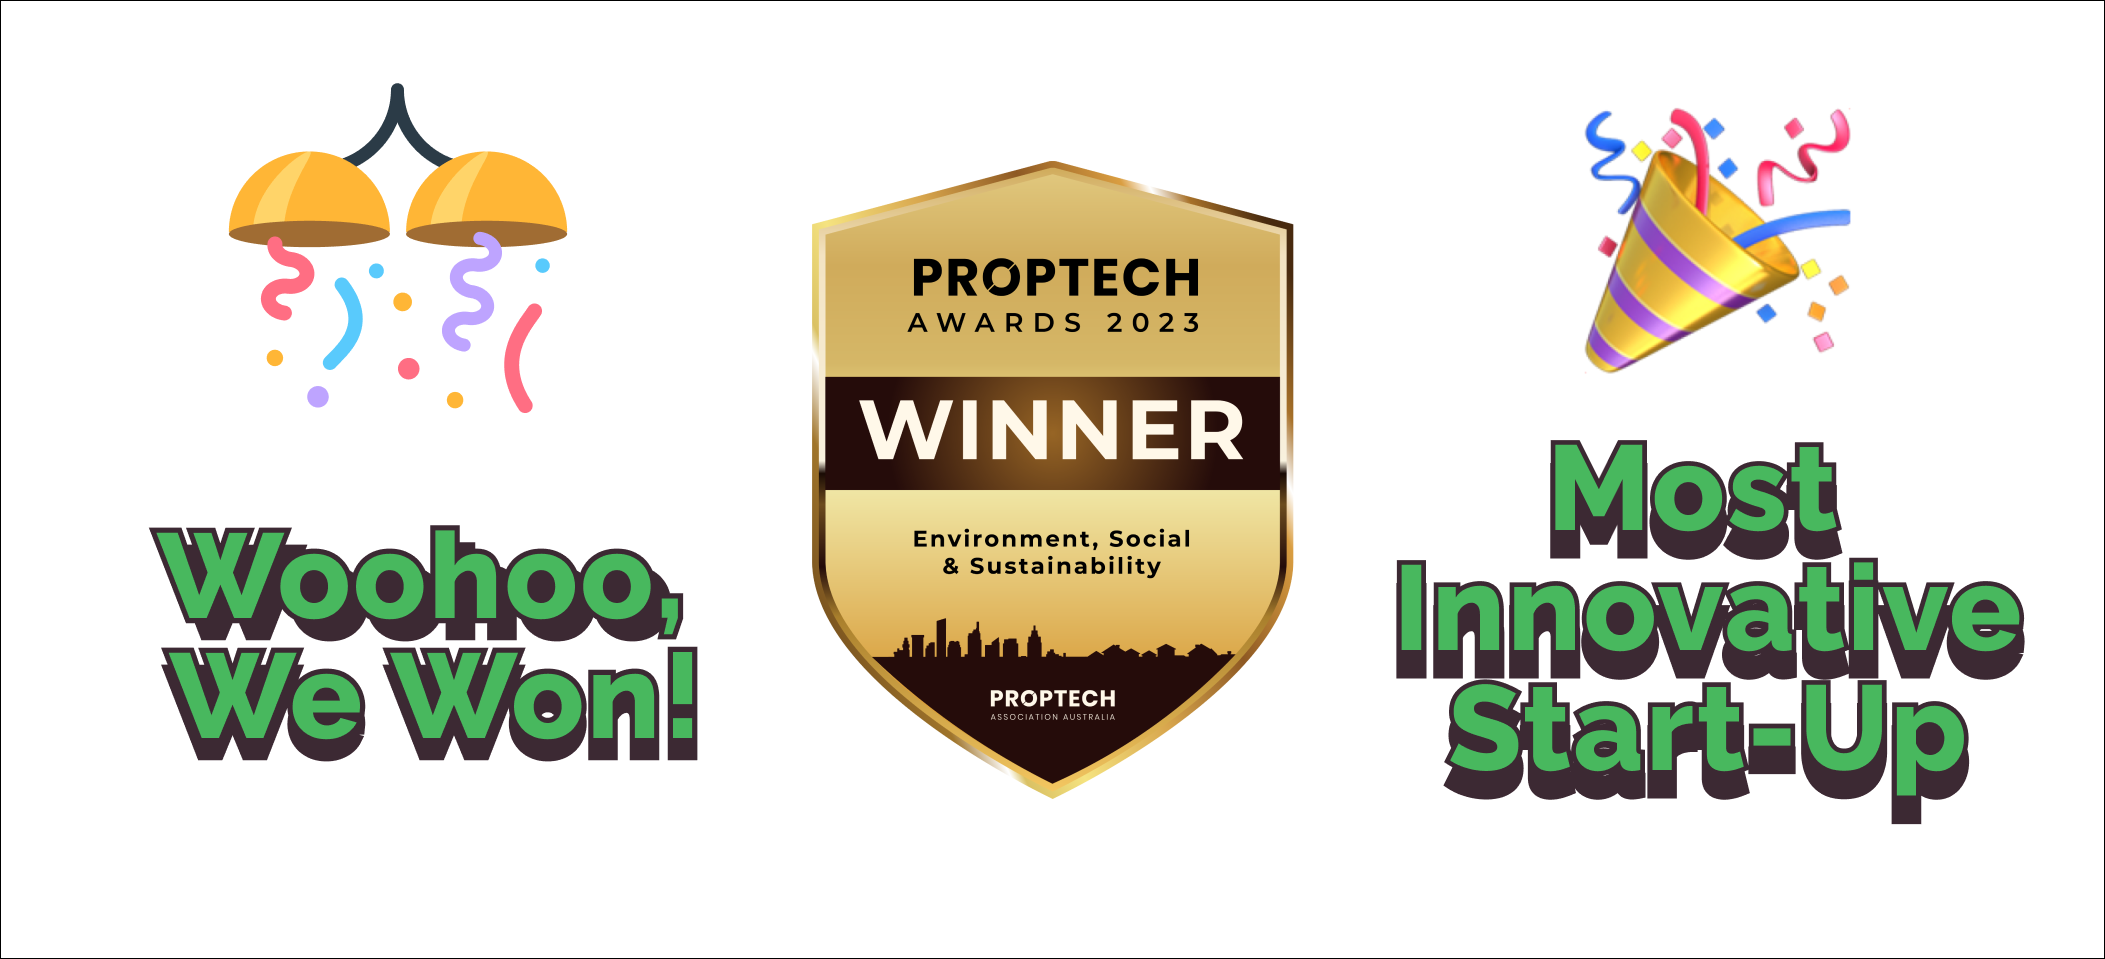 Evitat awarded 'Most Innovative Startup’ by Proptech Association Australia!